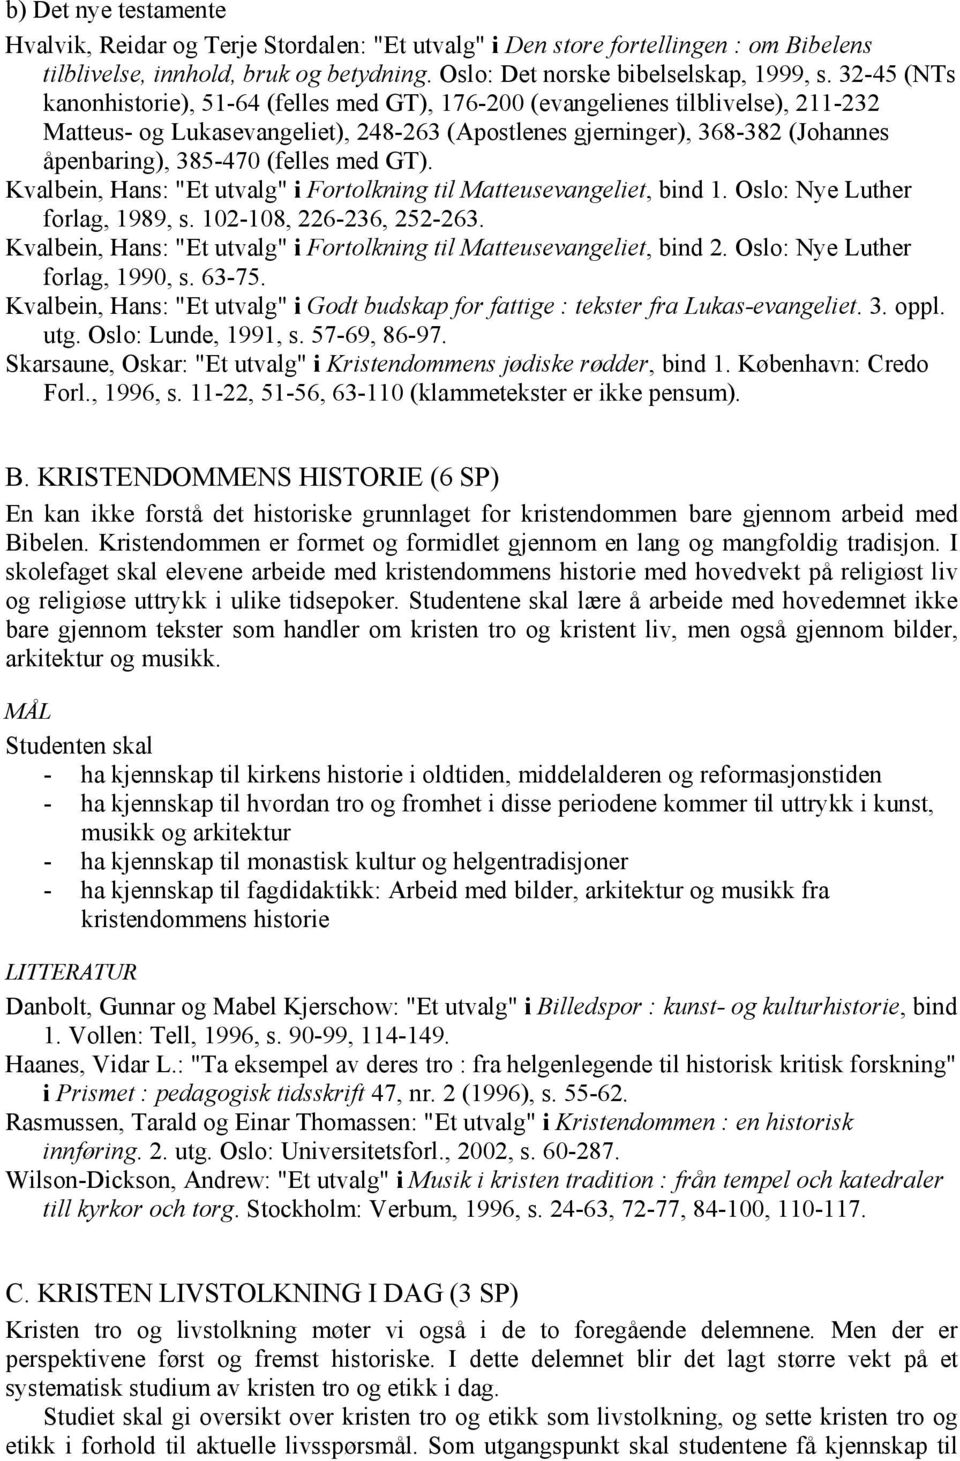 (felles med GT). Kvalbein, Hans: "Et utvalg" i Fortolkning til Matteusevangeliet, bind 1. Oslo: Nye Luther forlag, 1989, s. 102-108, 226-236, 252-263.